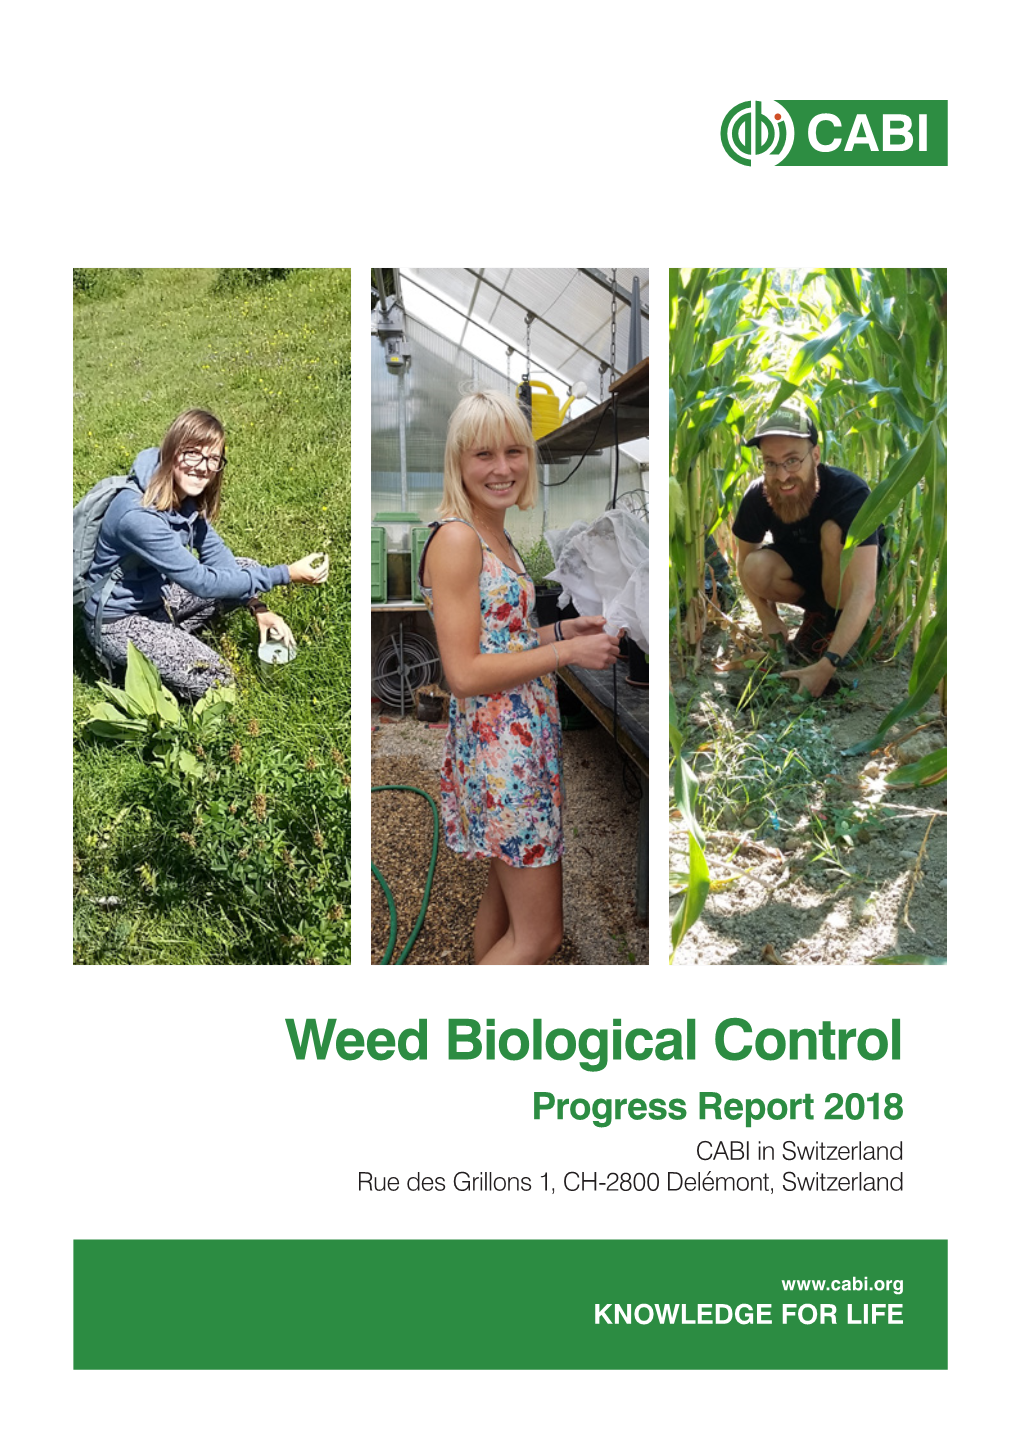 Weed Biological Control Progress Report (2018)